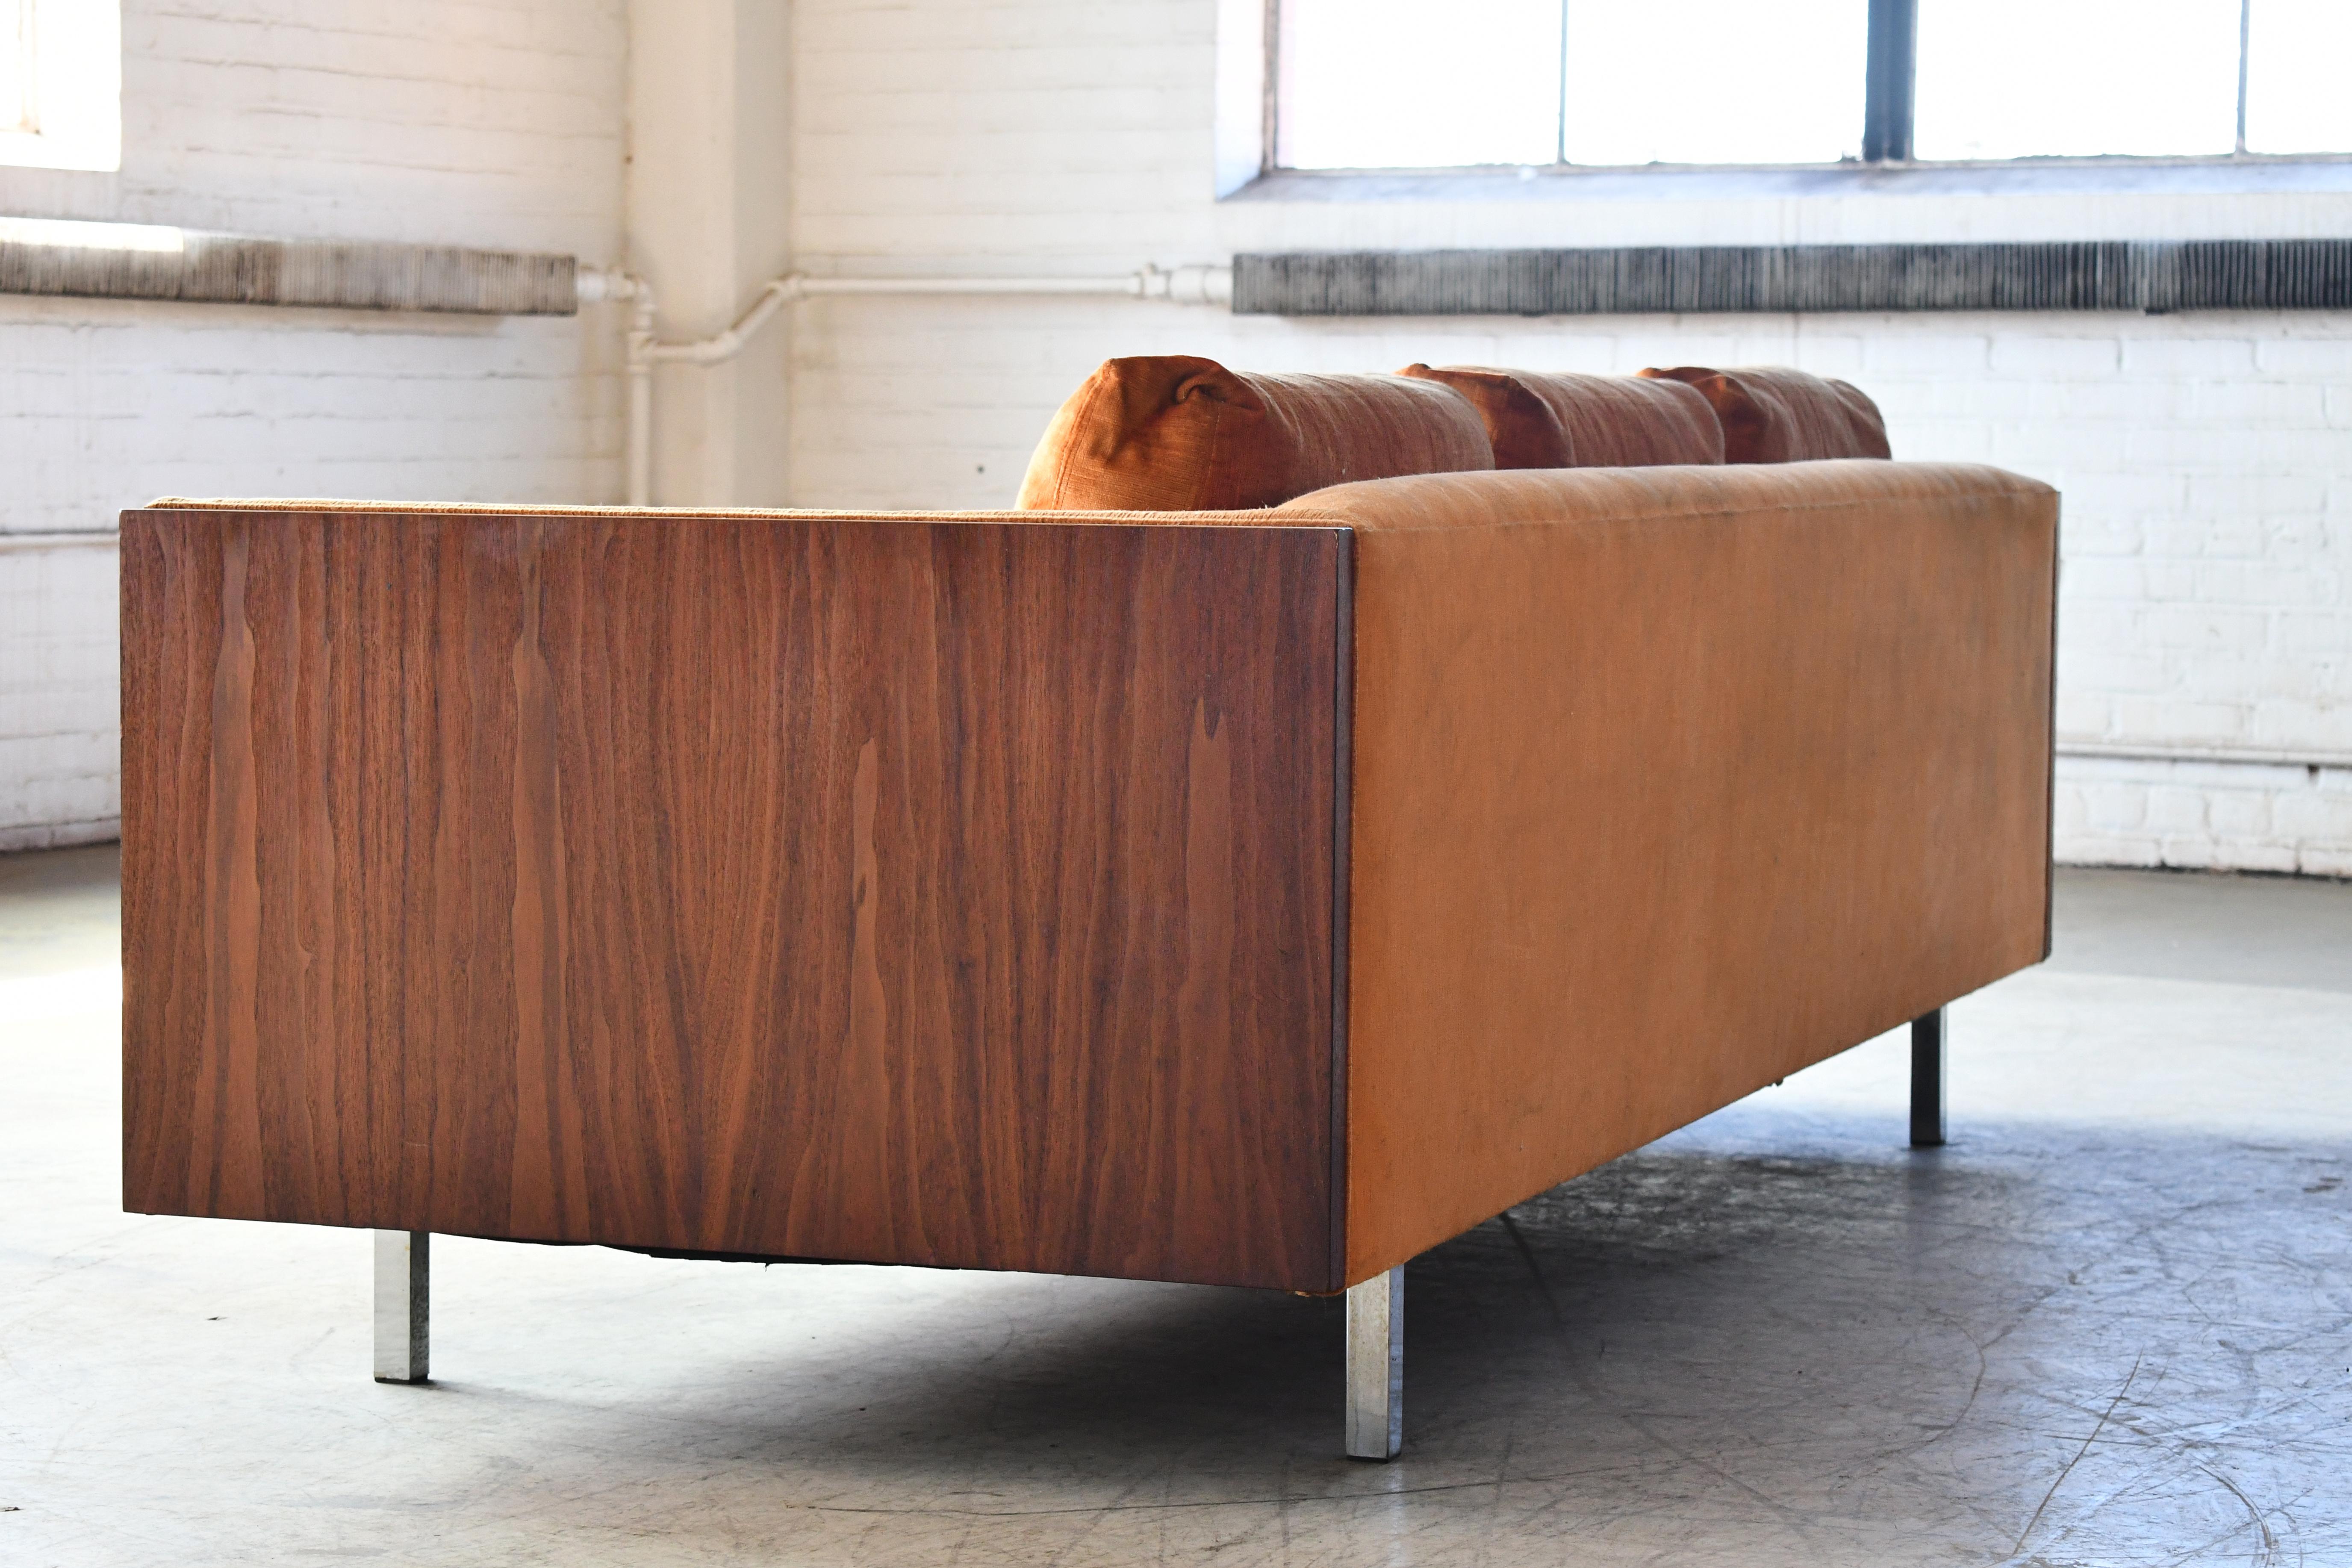 Steel Case Sofa by Milo Baughman in Walnut with Chrome Legs, 1960-70's